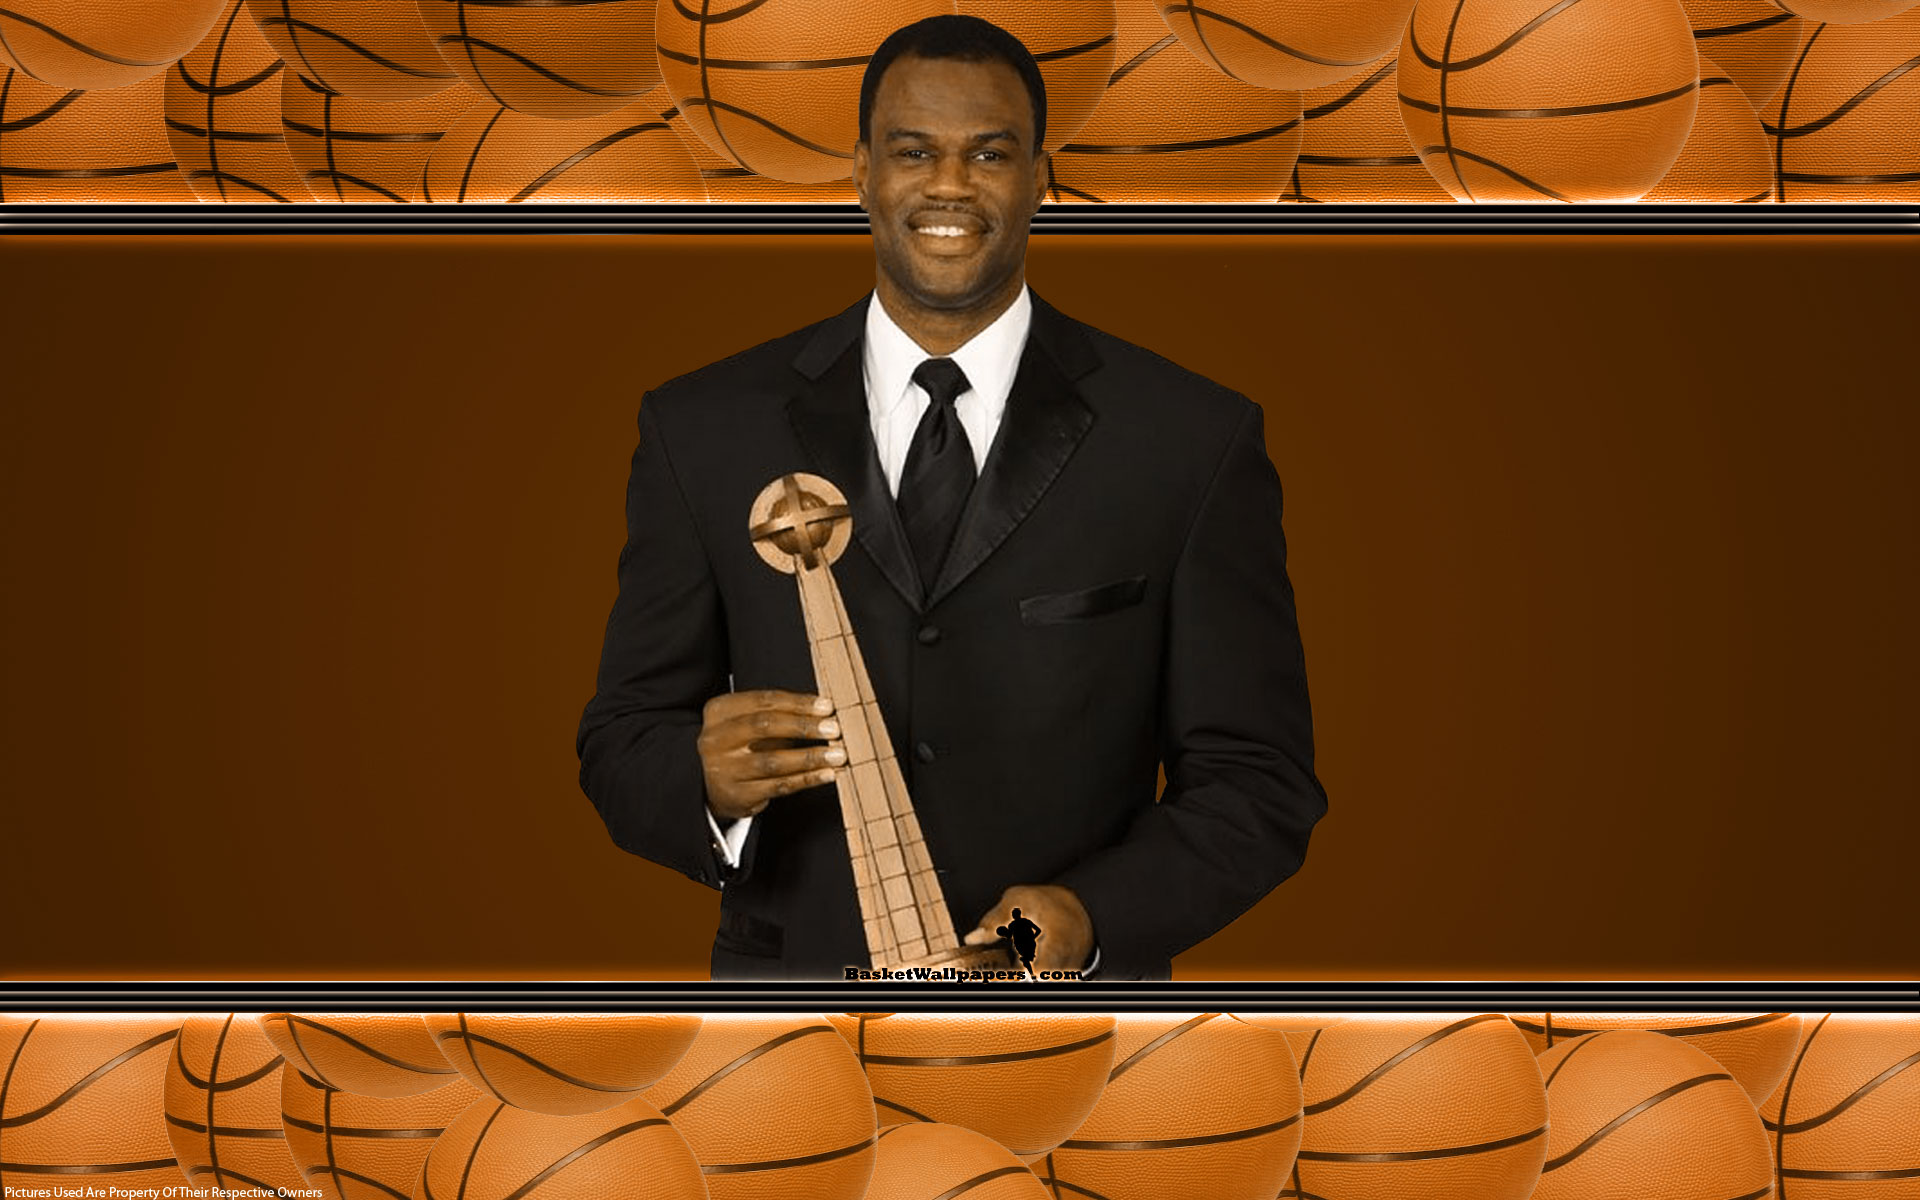 David Robinson Basketball Widescreen Usa Image Wallpaper